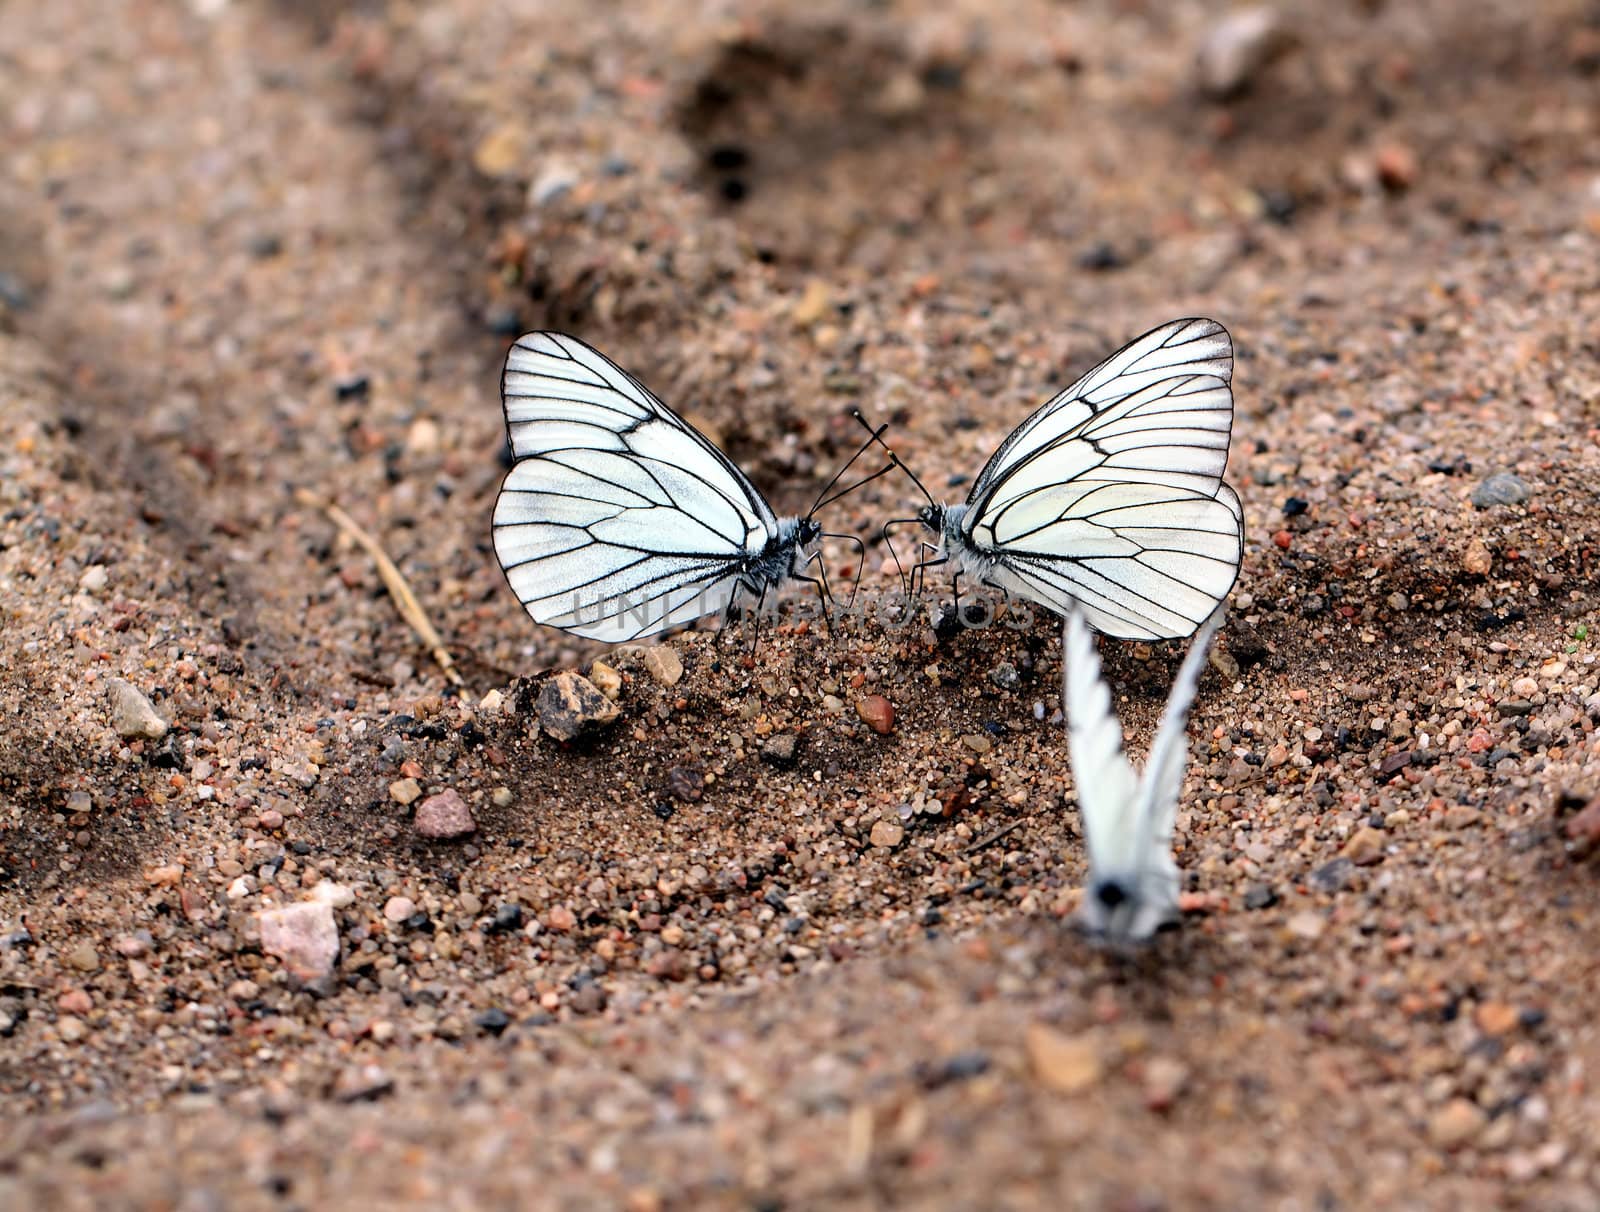 butterflies on land by basel101658